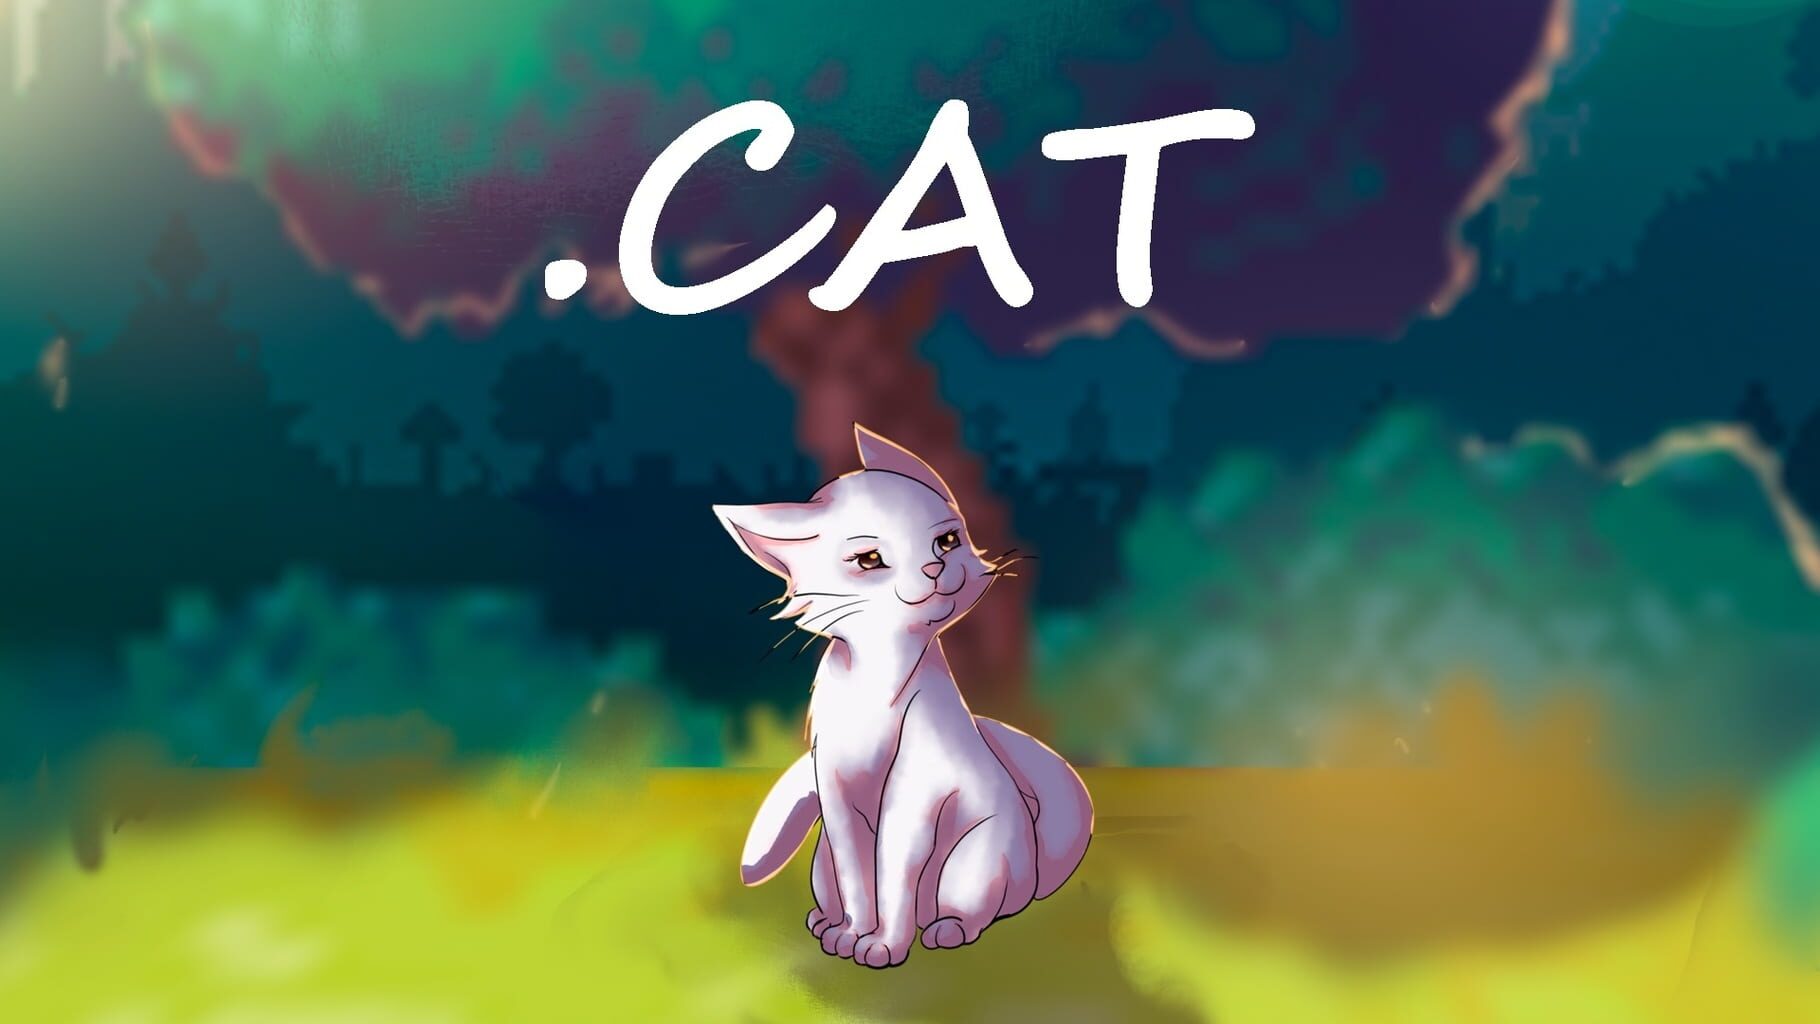 .Cat artwork